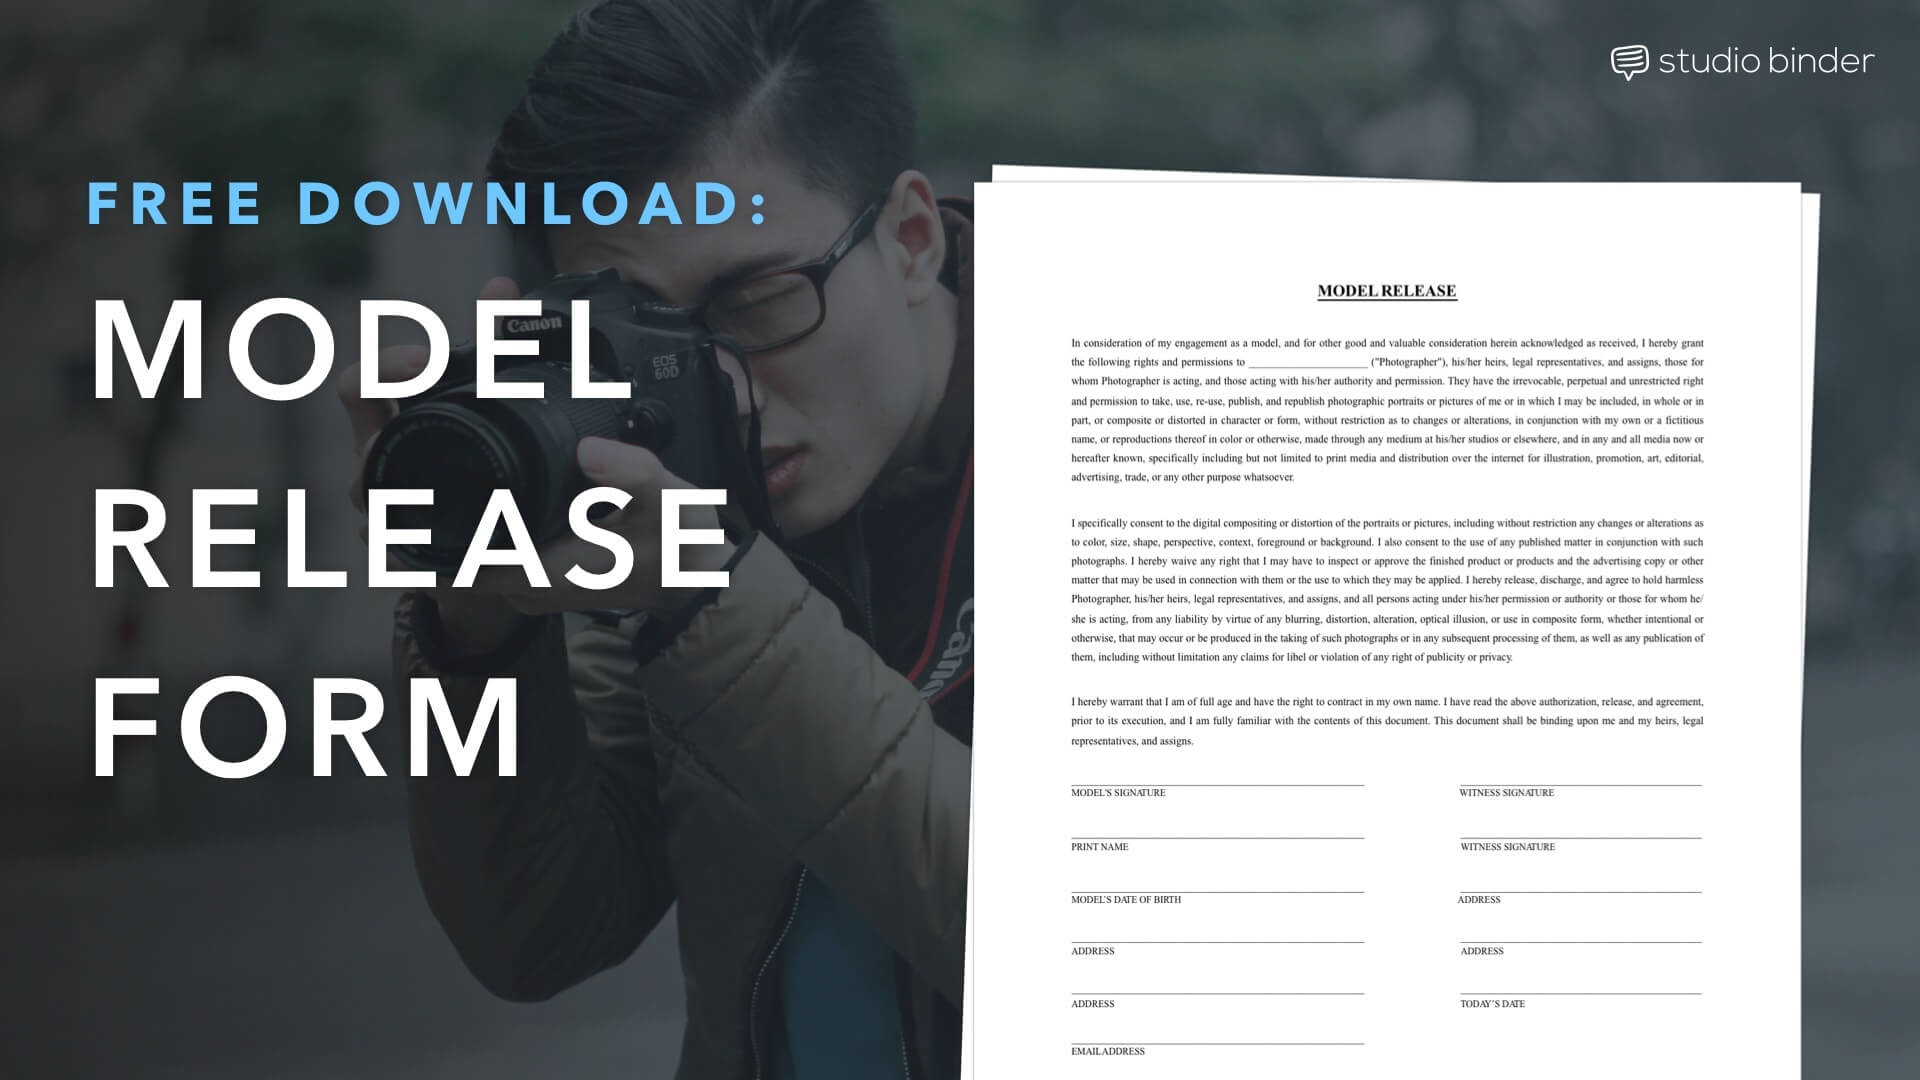 FREE Model Release Form Template Download PDF - Featured Image - StudioBinder